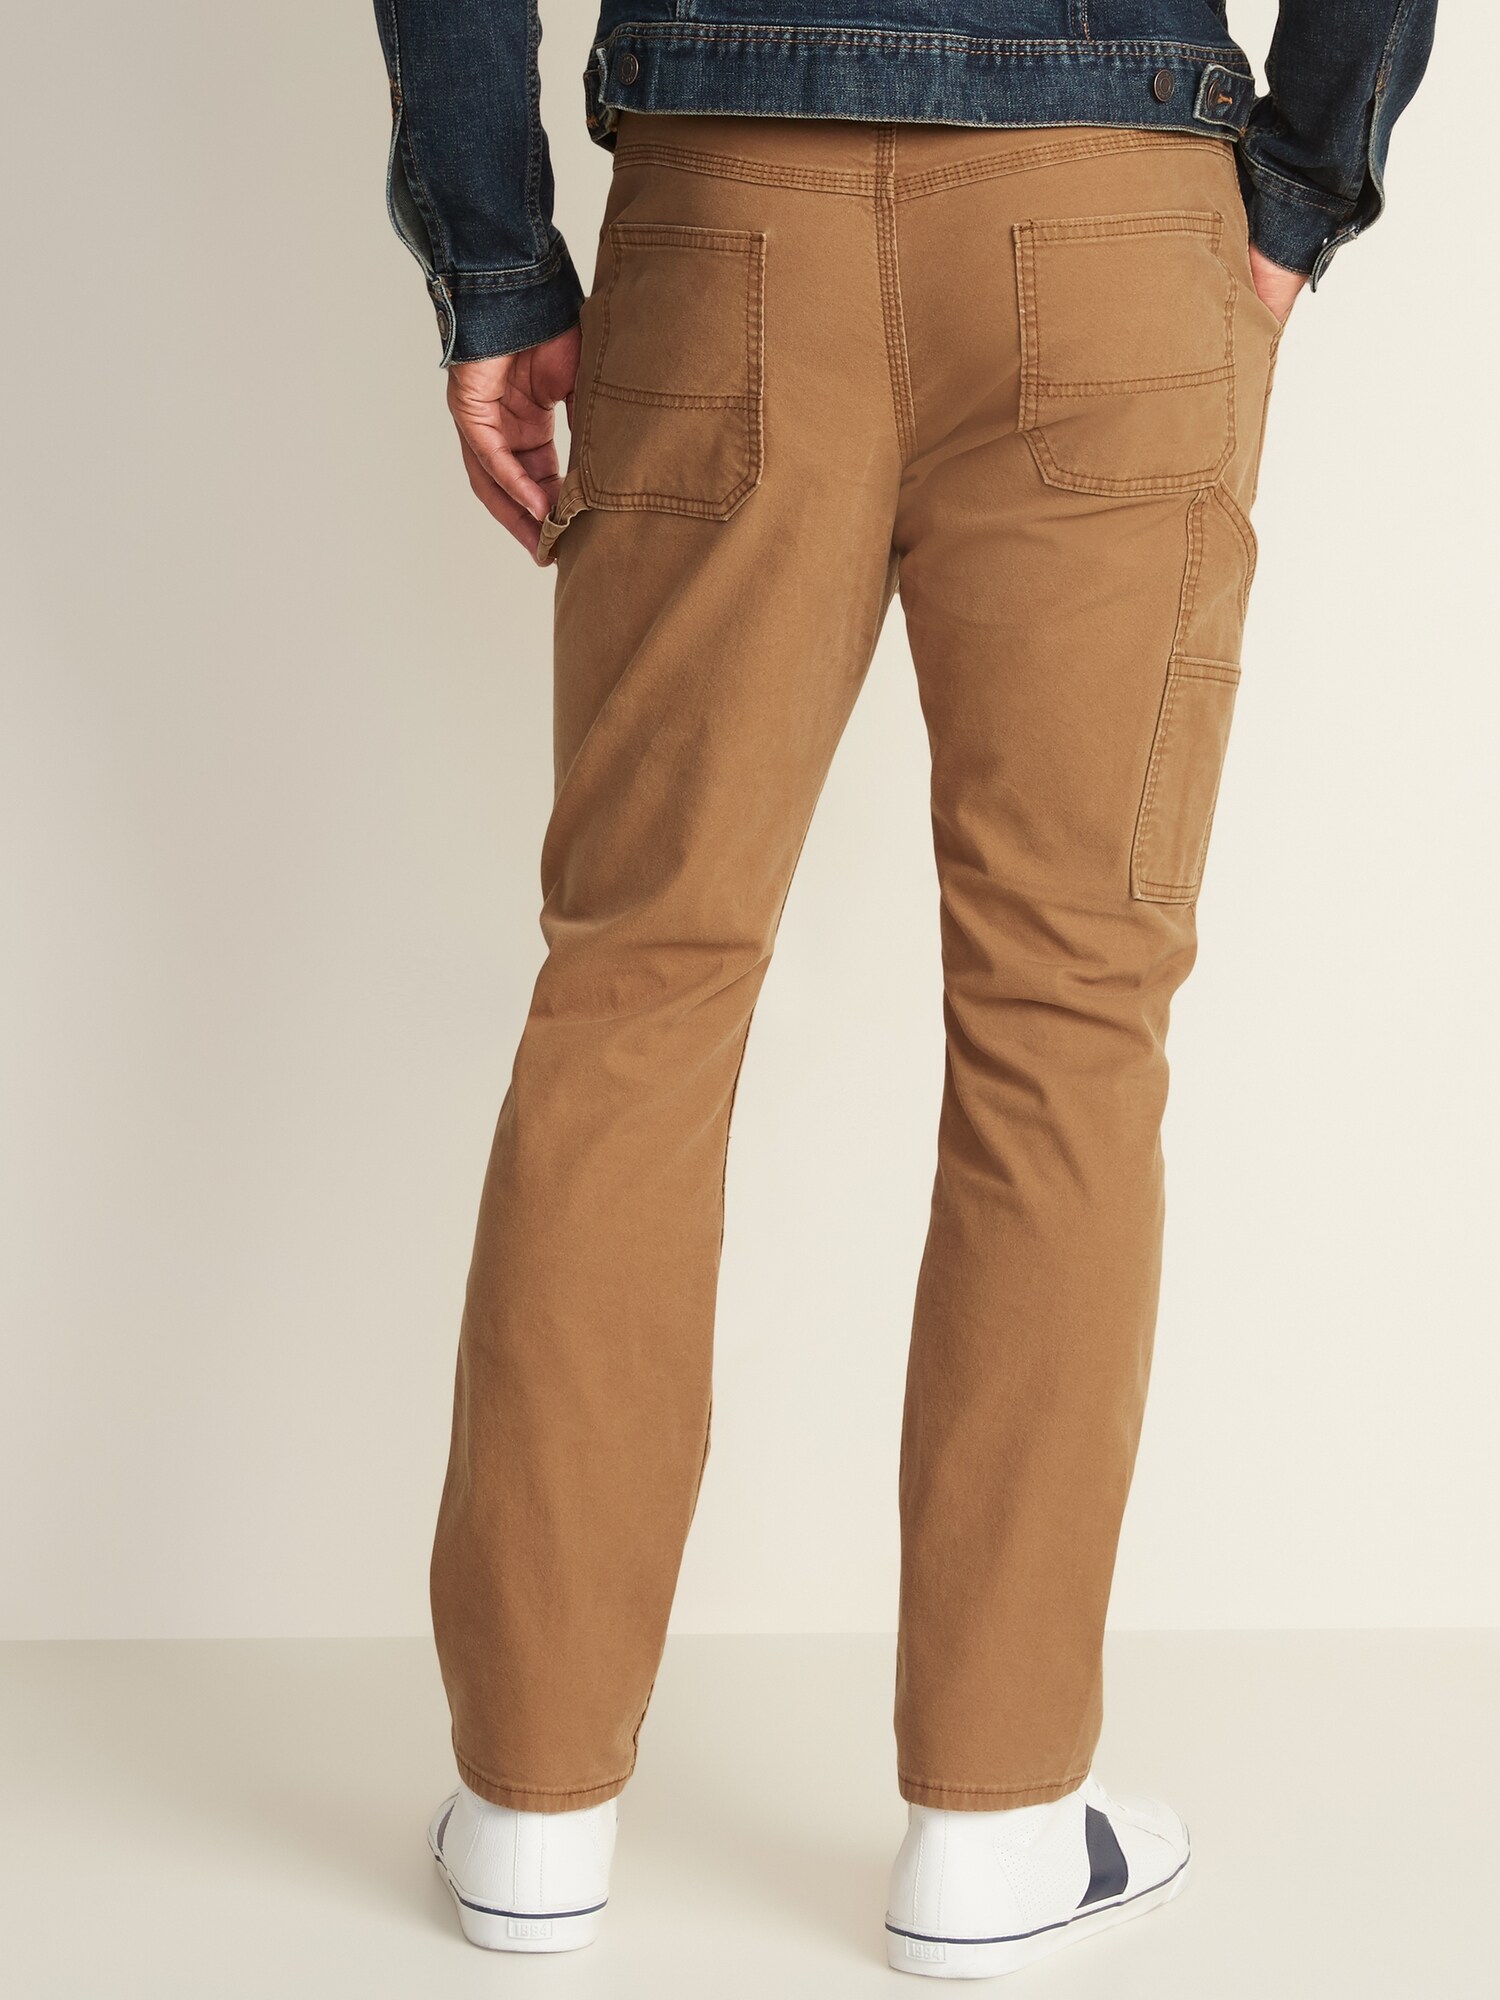 Straight Built-In Flex Twill Five-Pocket Pants